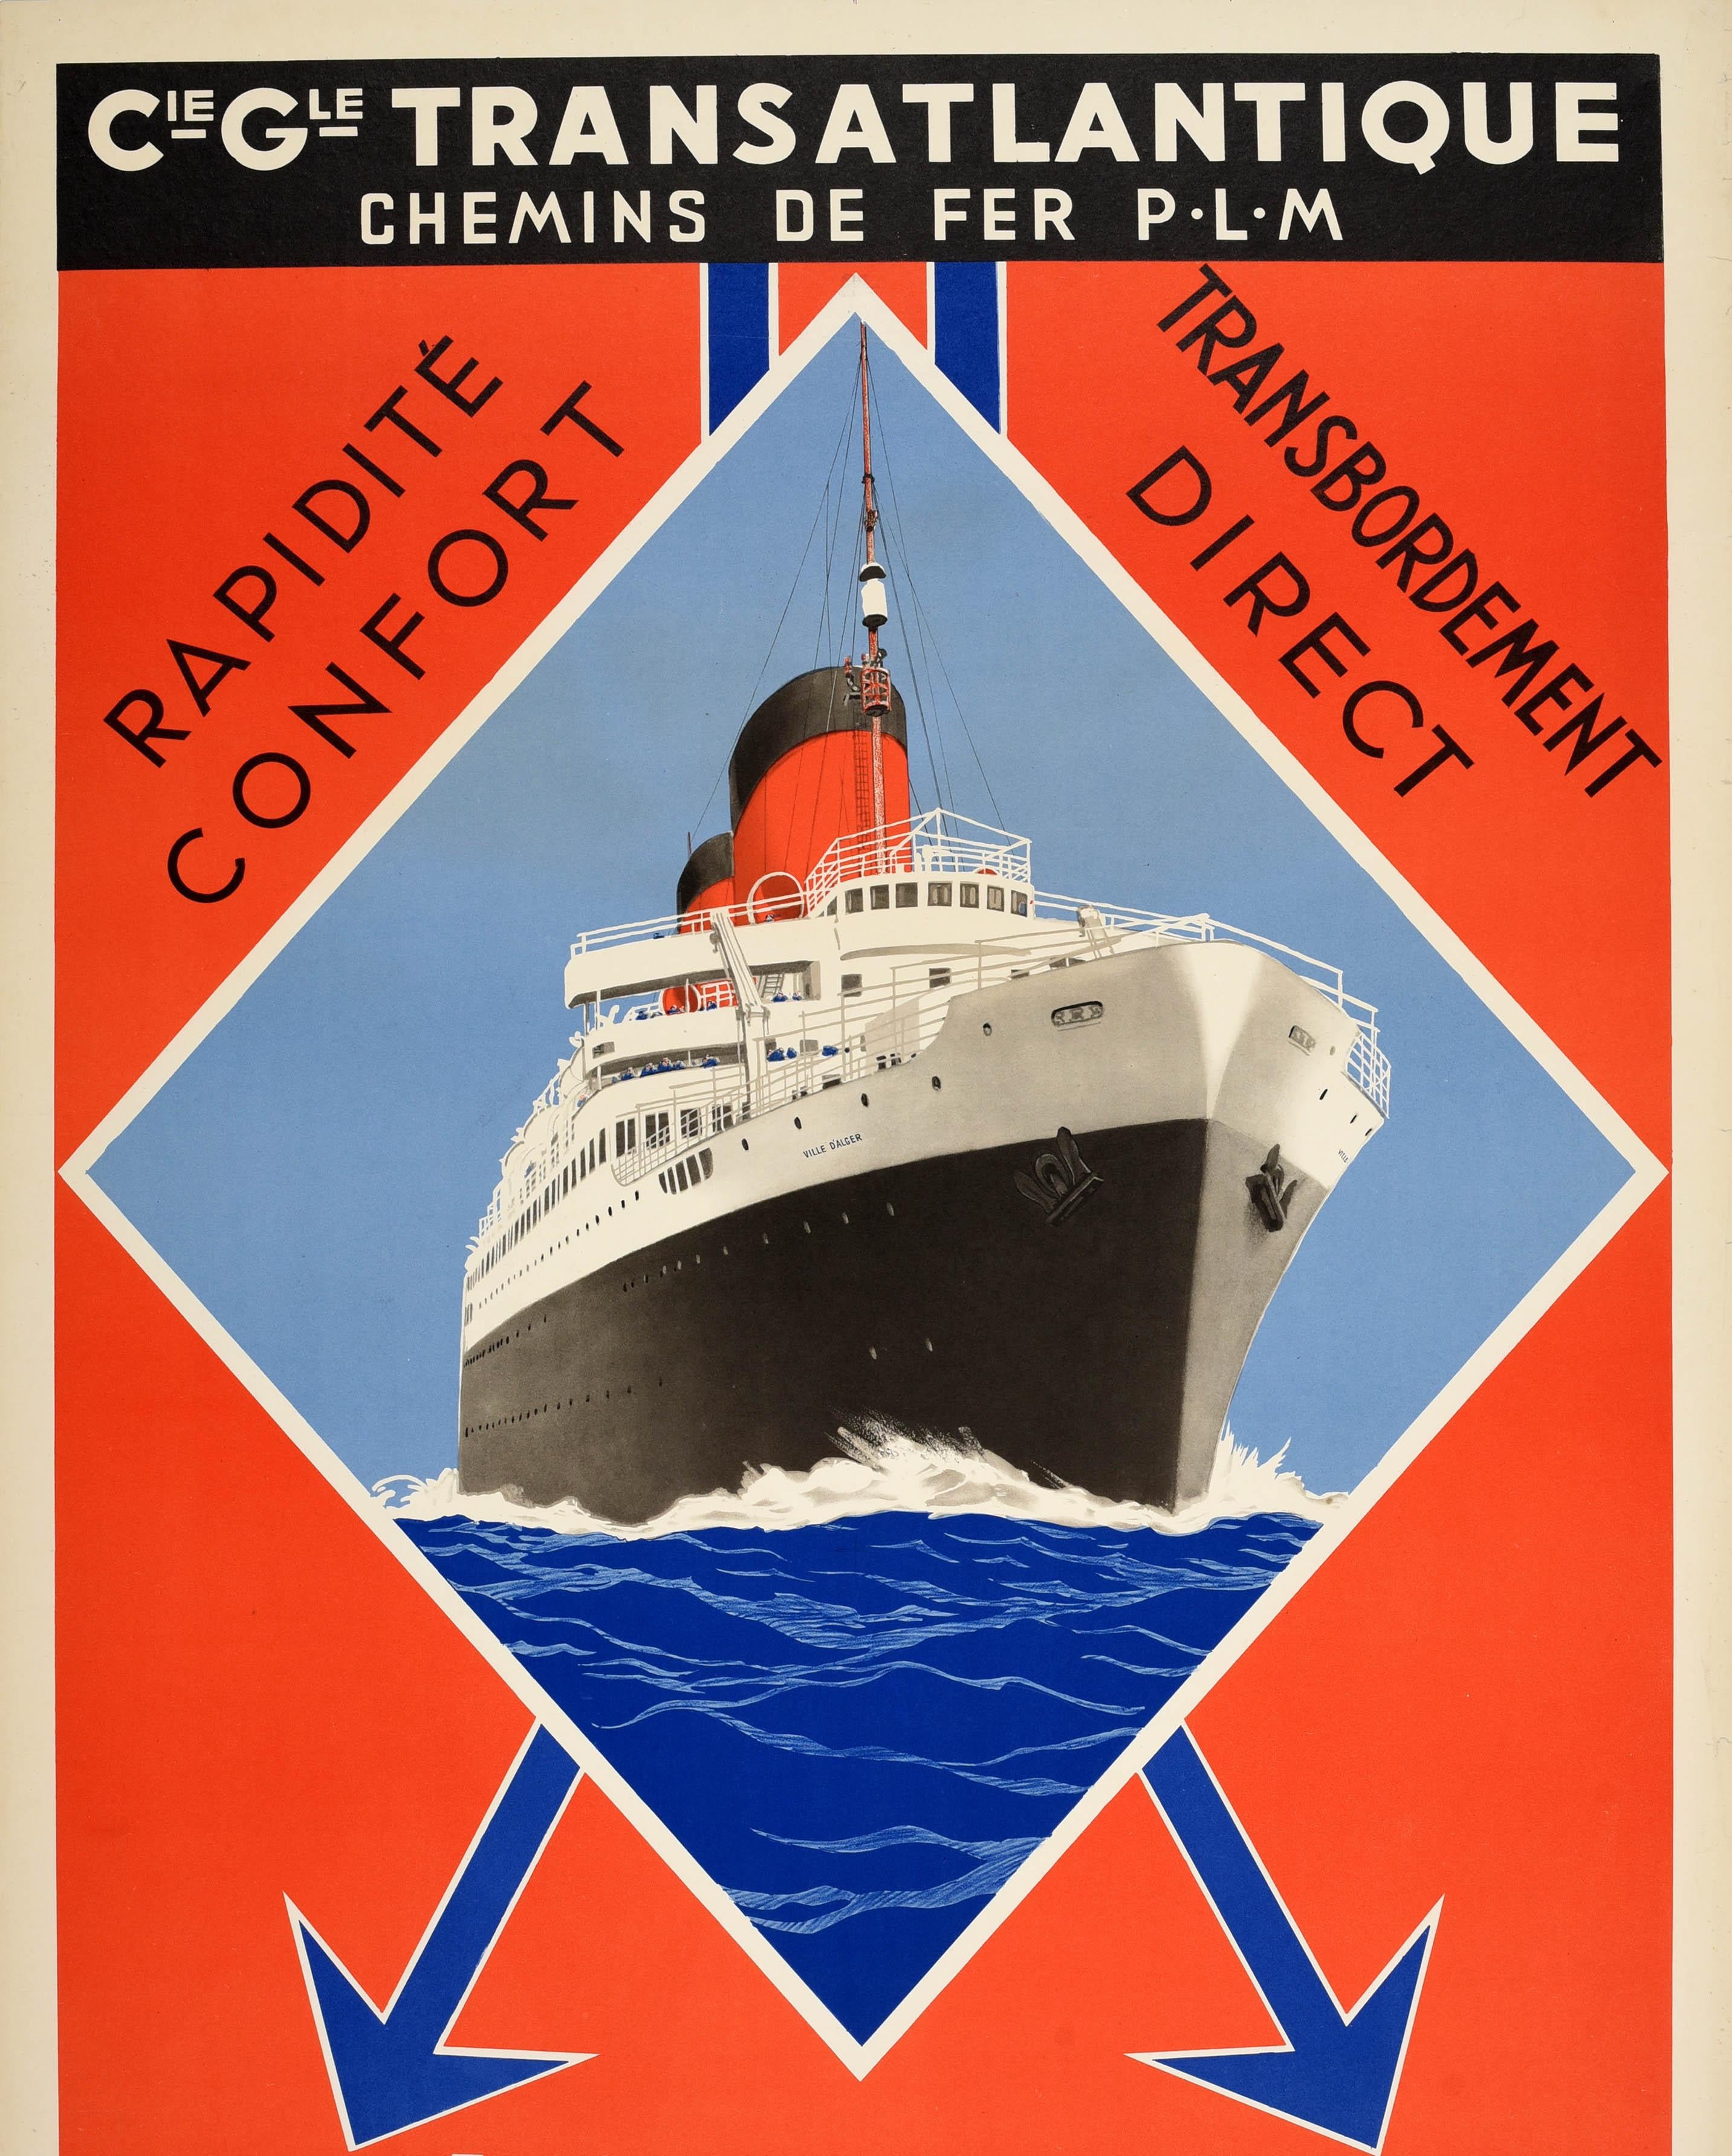 French Original Vintage Travel Poster Algeria Tunisia Cie Gle Transatlantique PLM Art For Sale